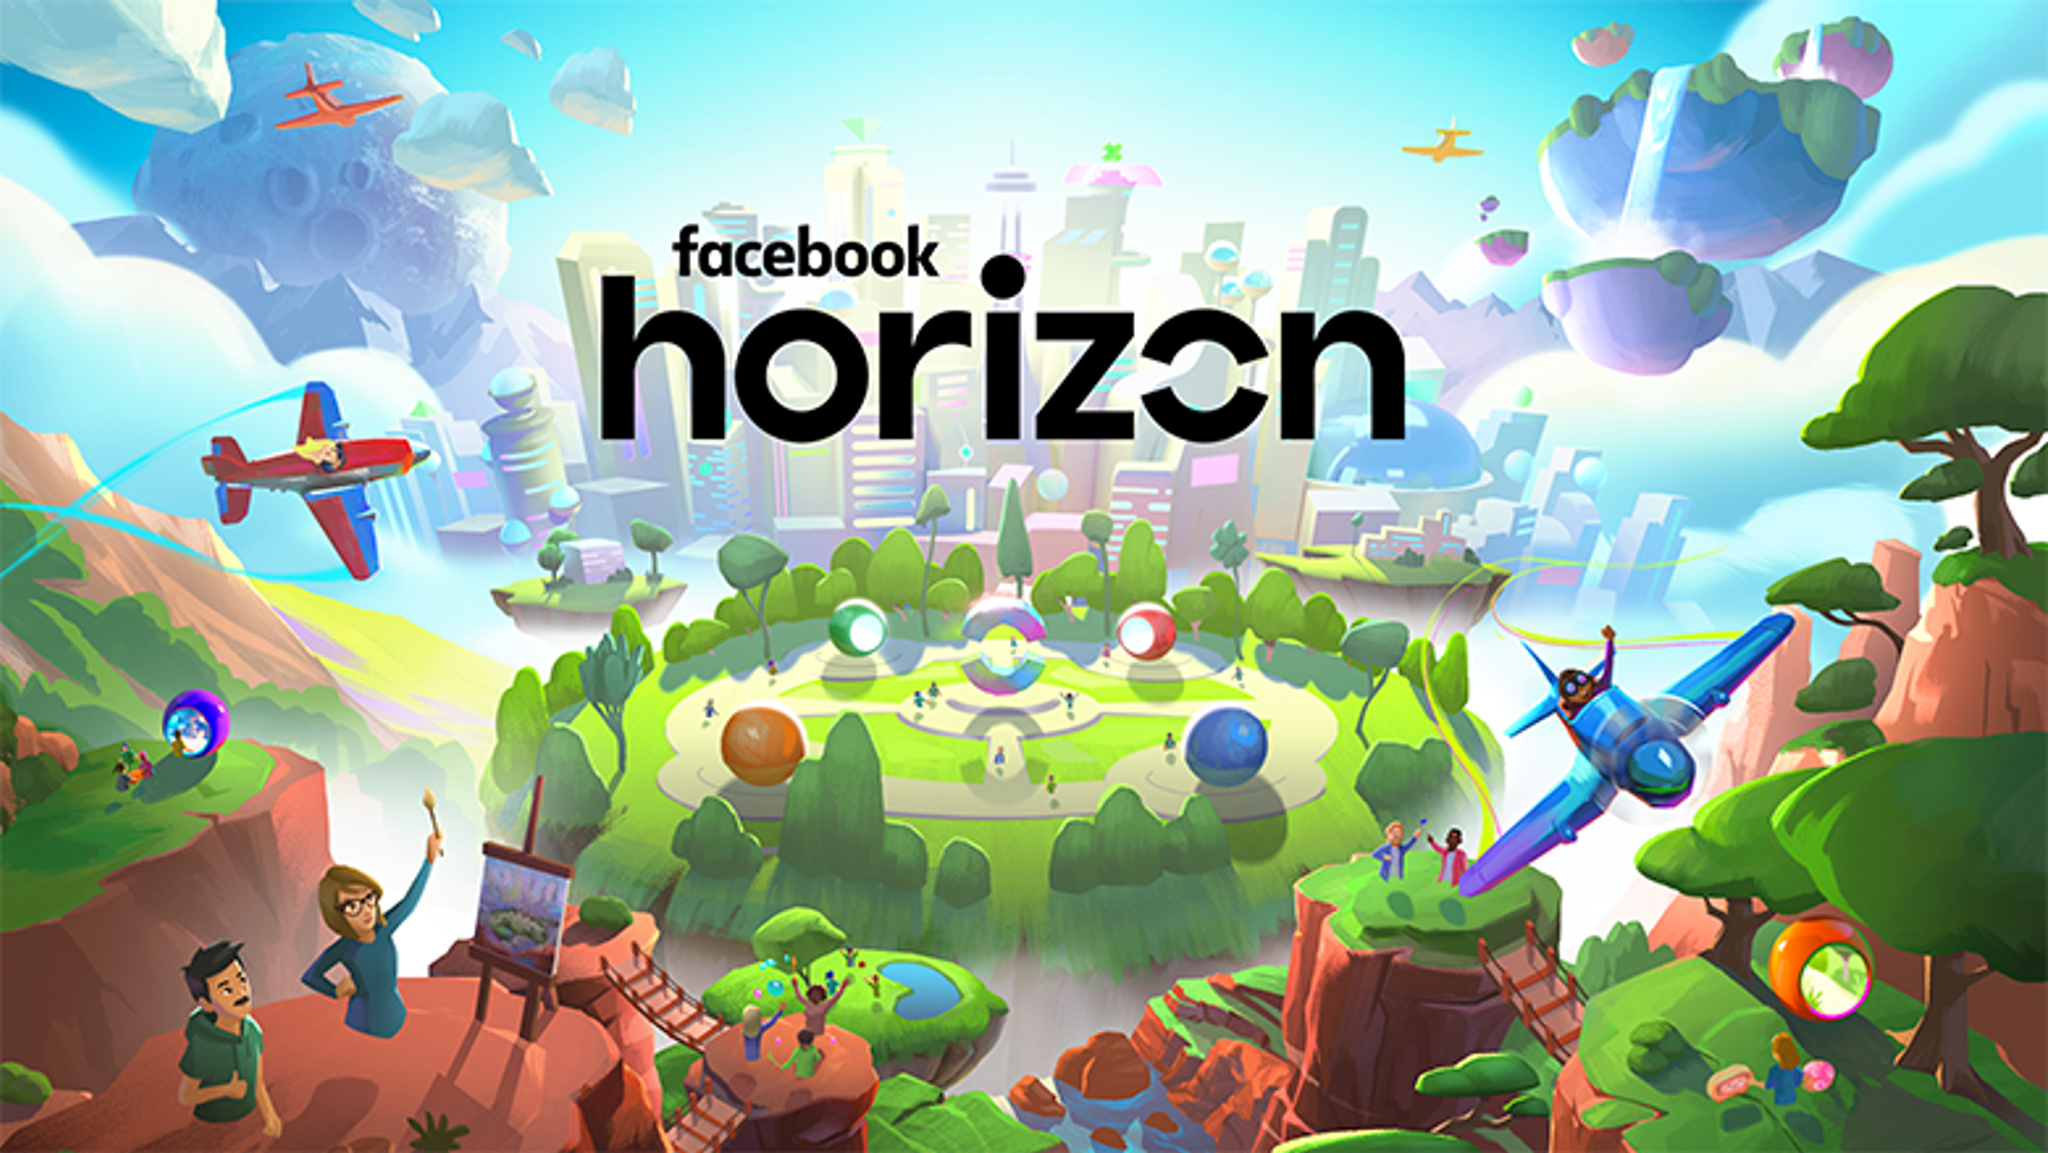 Facebook Horizon: creating social fabric in VR